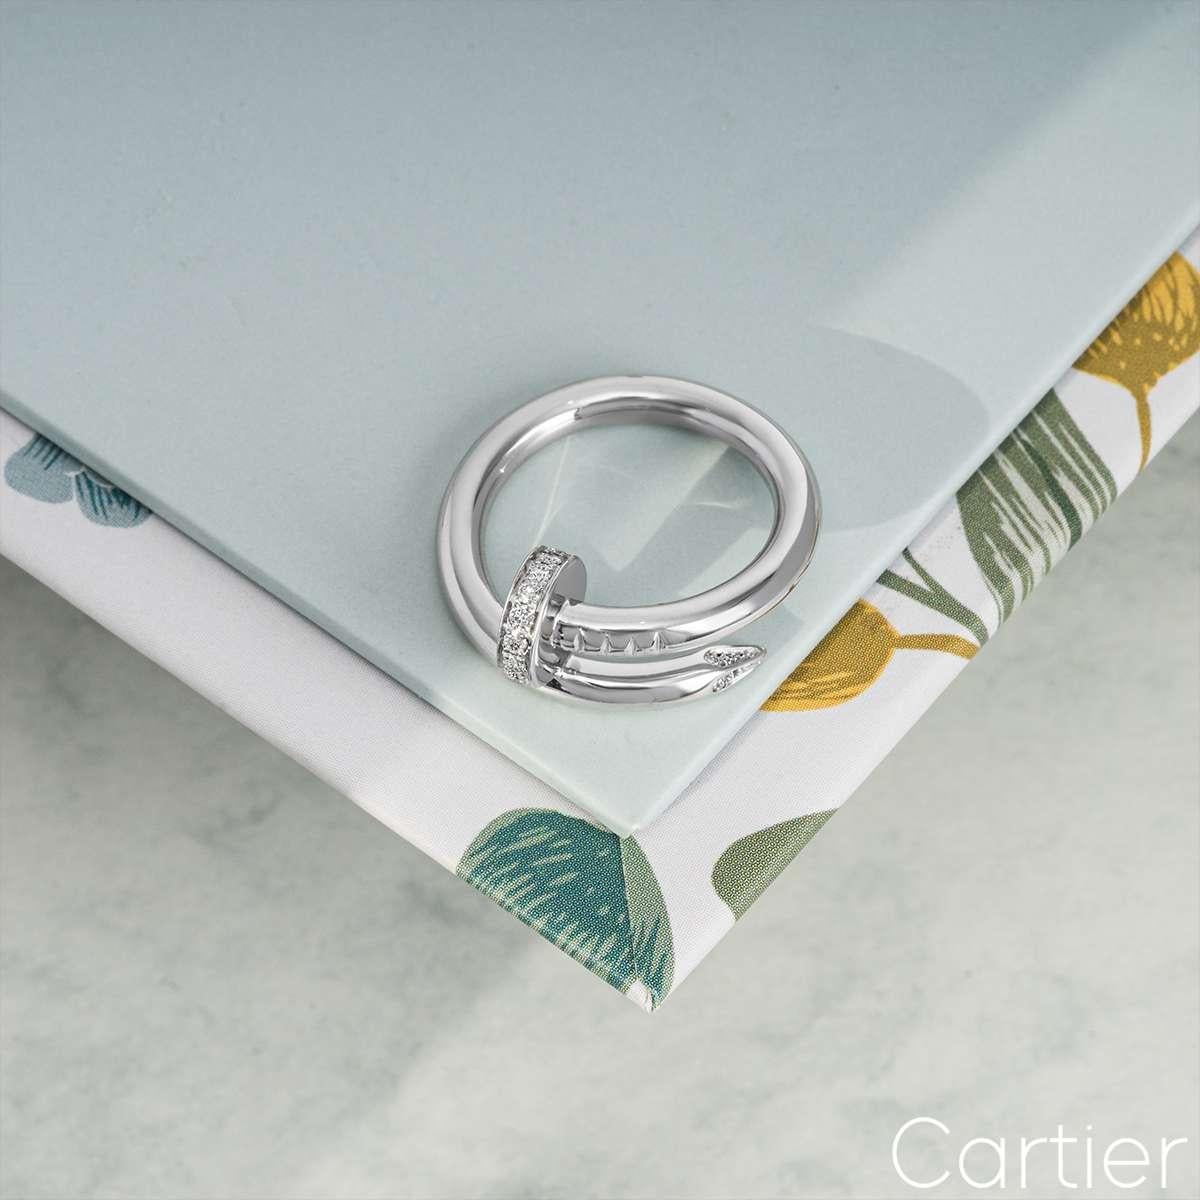 Cartier White Gold Diamond Juste un Clou Ring Size 51 B4092700 For Sale 2